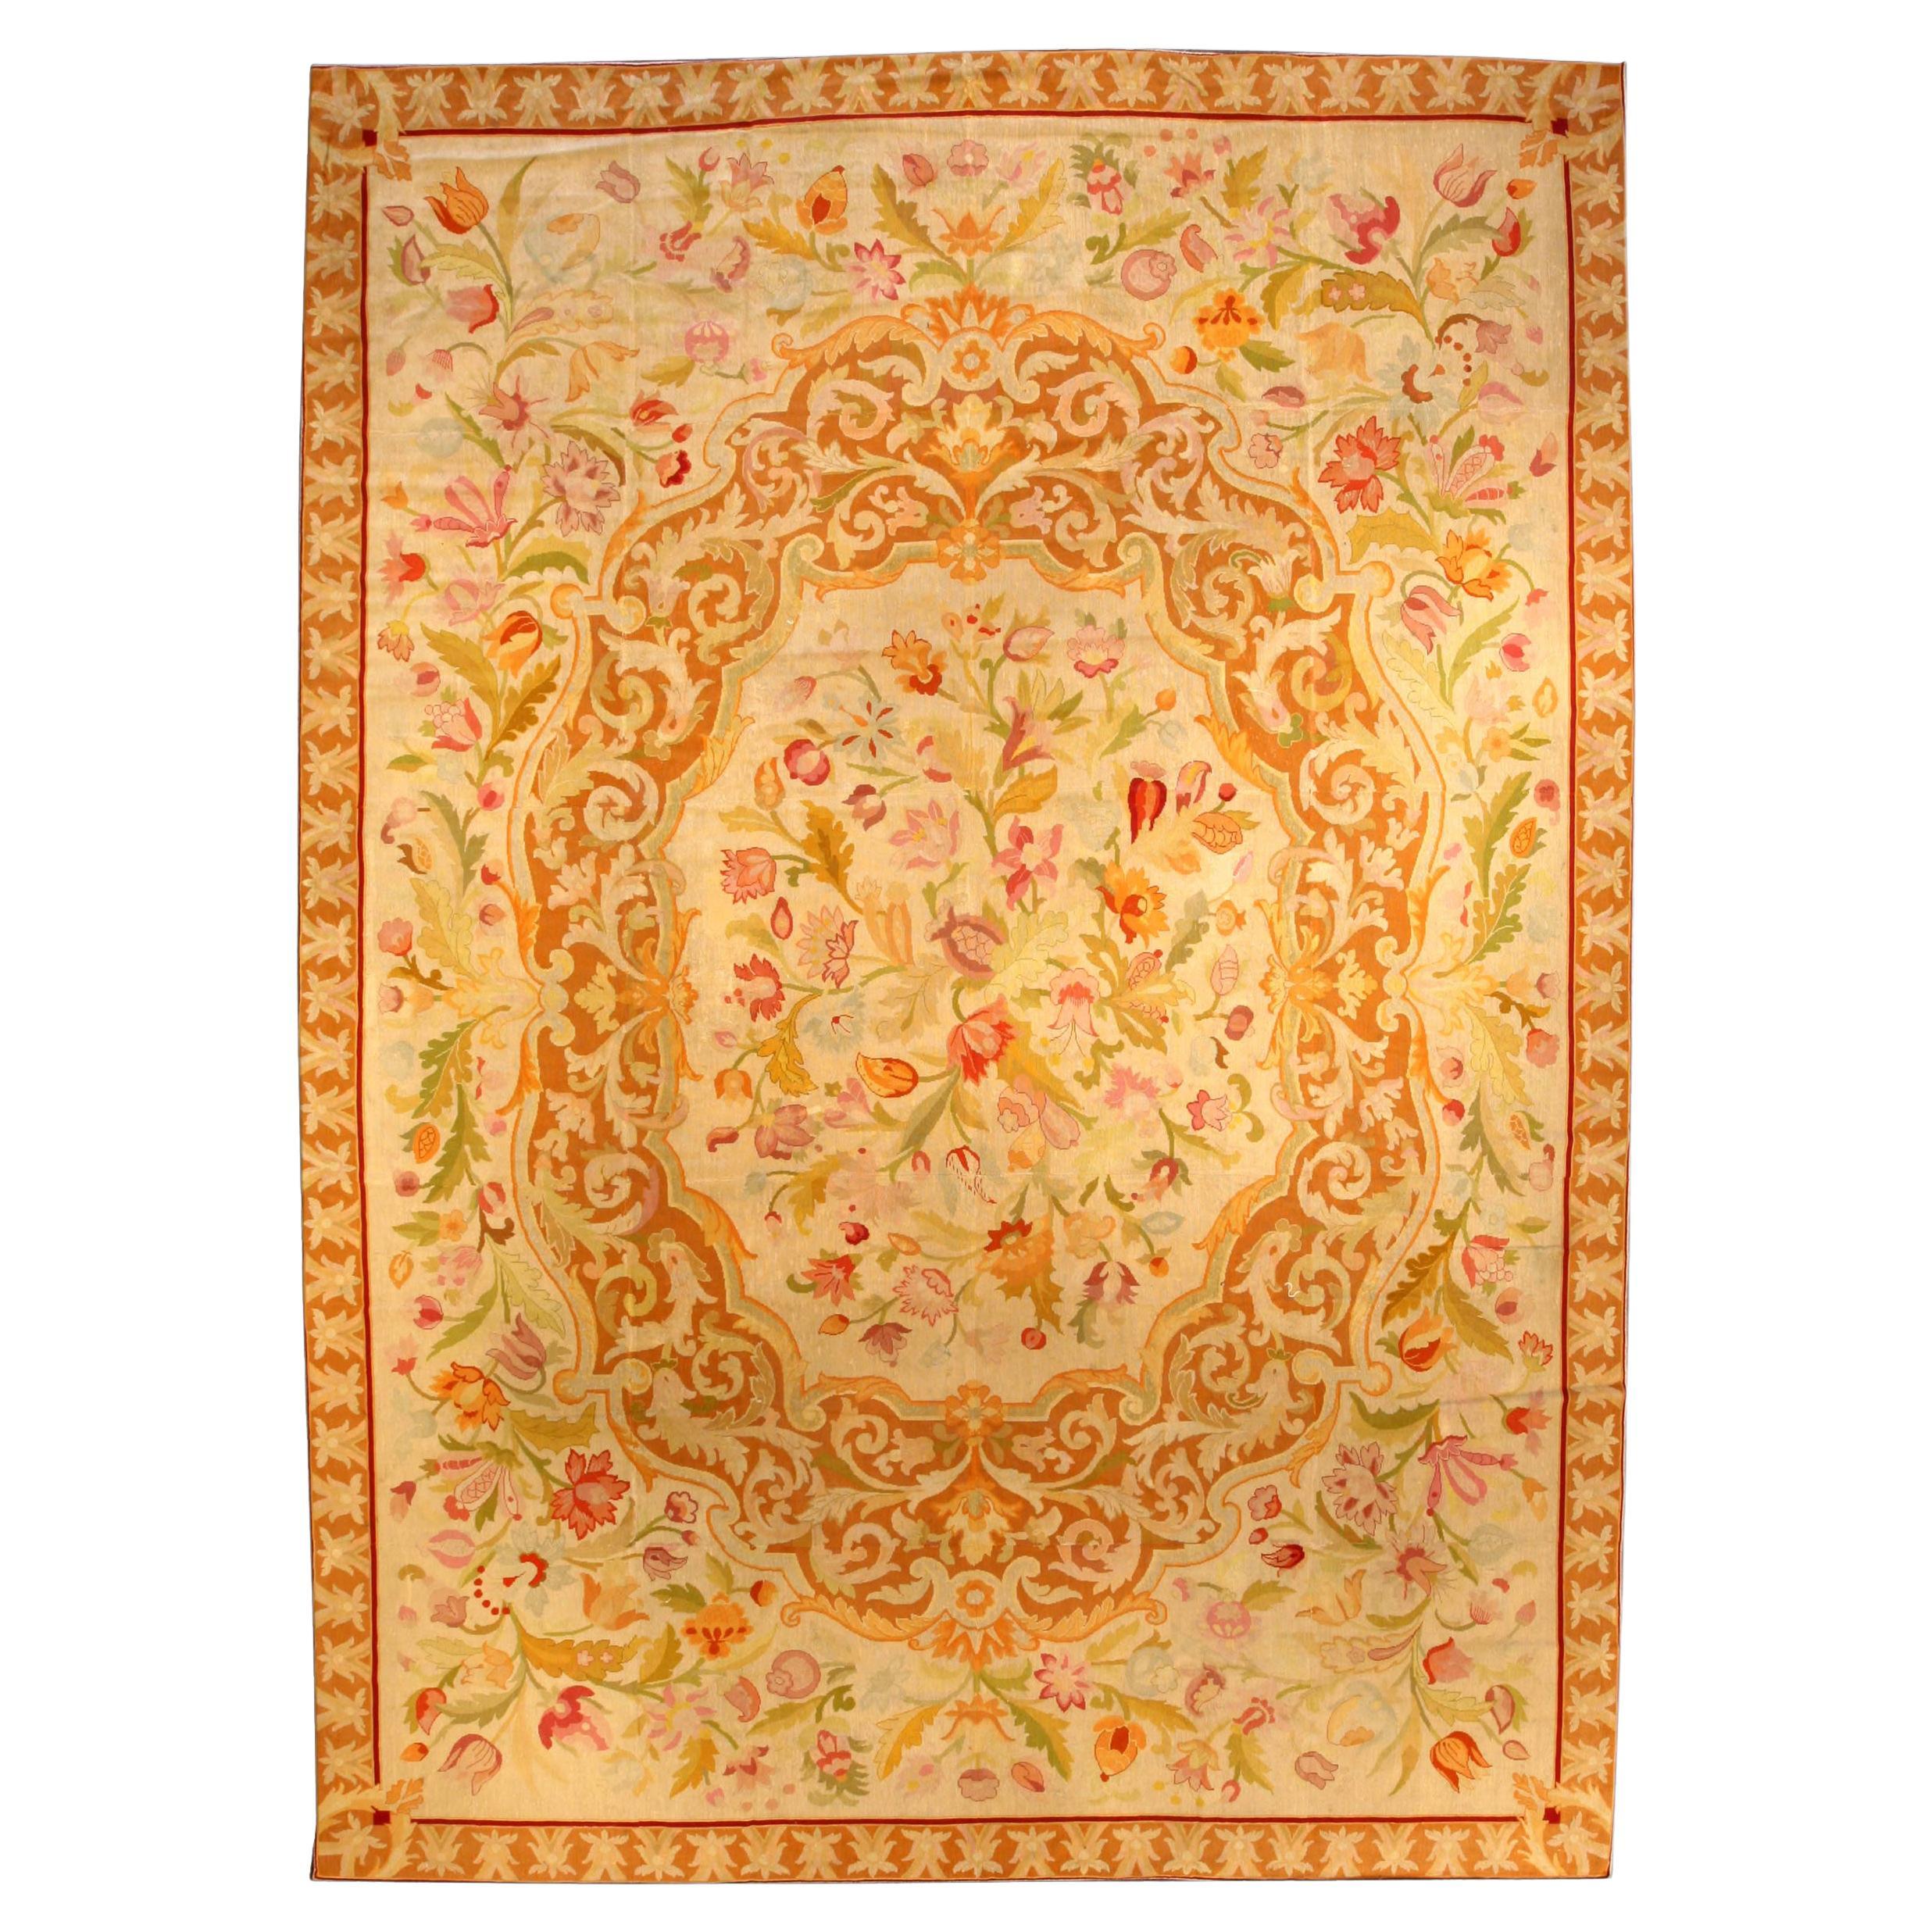 Antique Botanic Orange Needlework Carpet